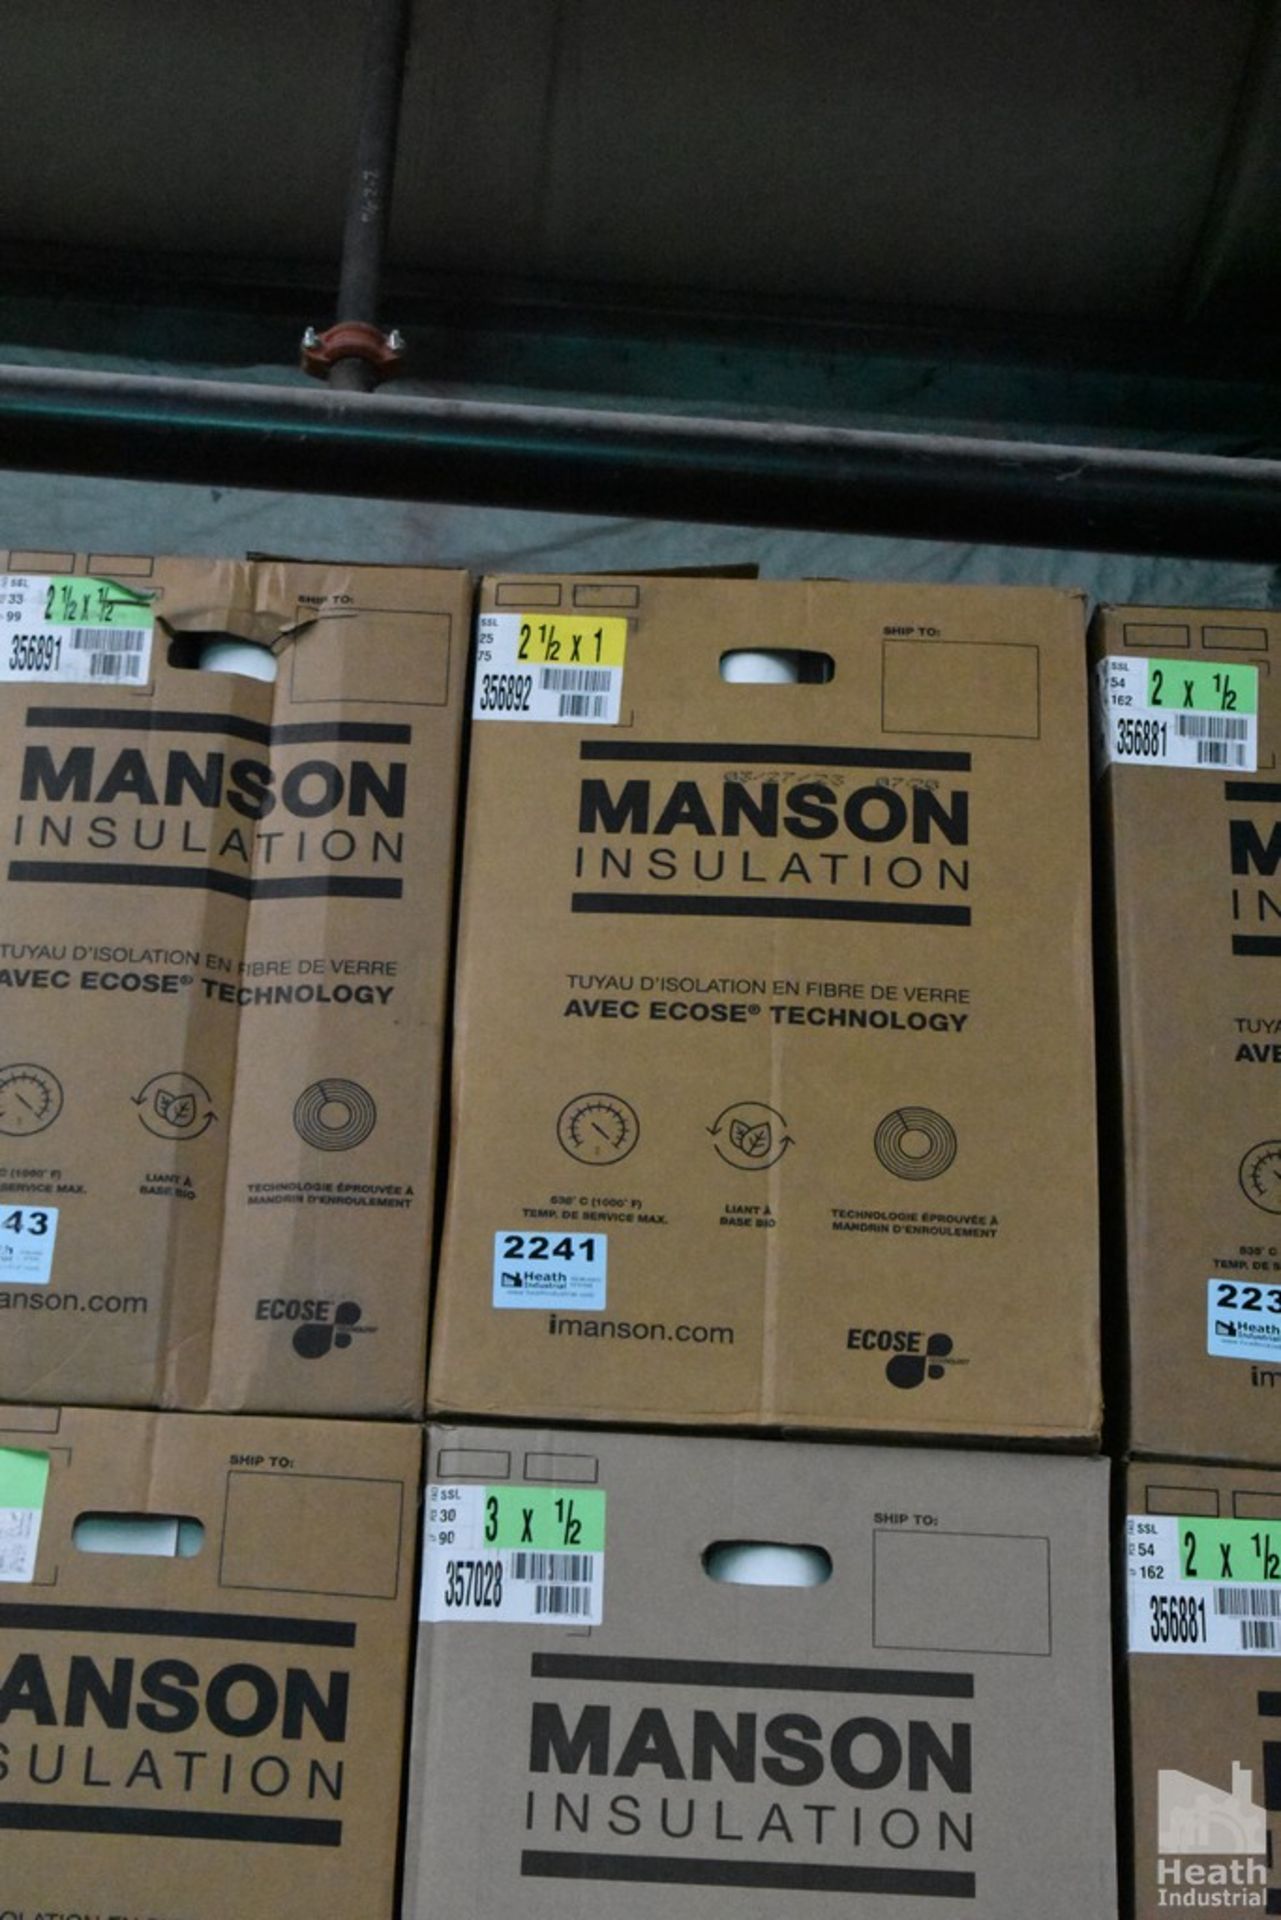 CASE OF MANSON INSULATION, 2-1/2 X 1, NEW IN BOX, NO. 356892